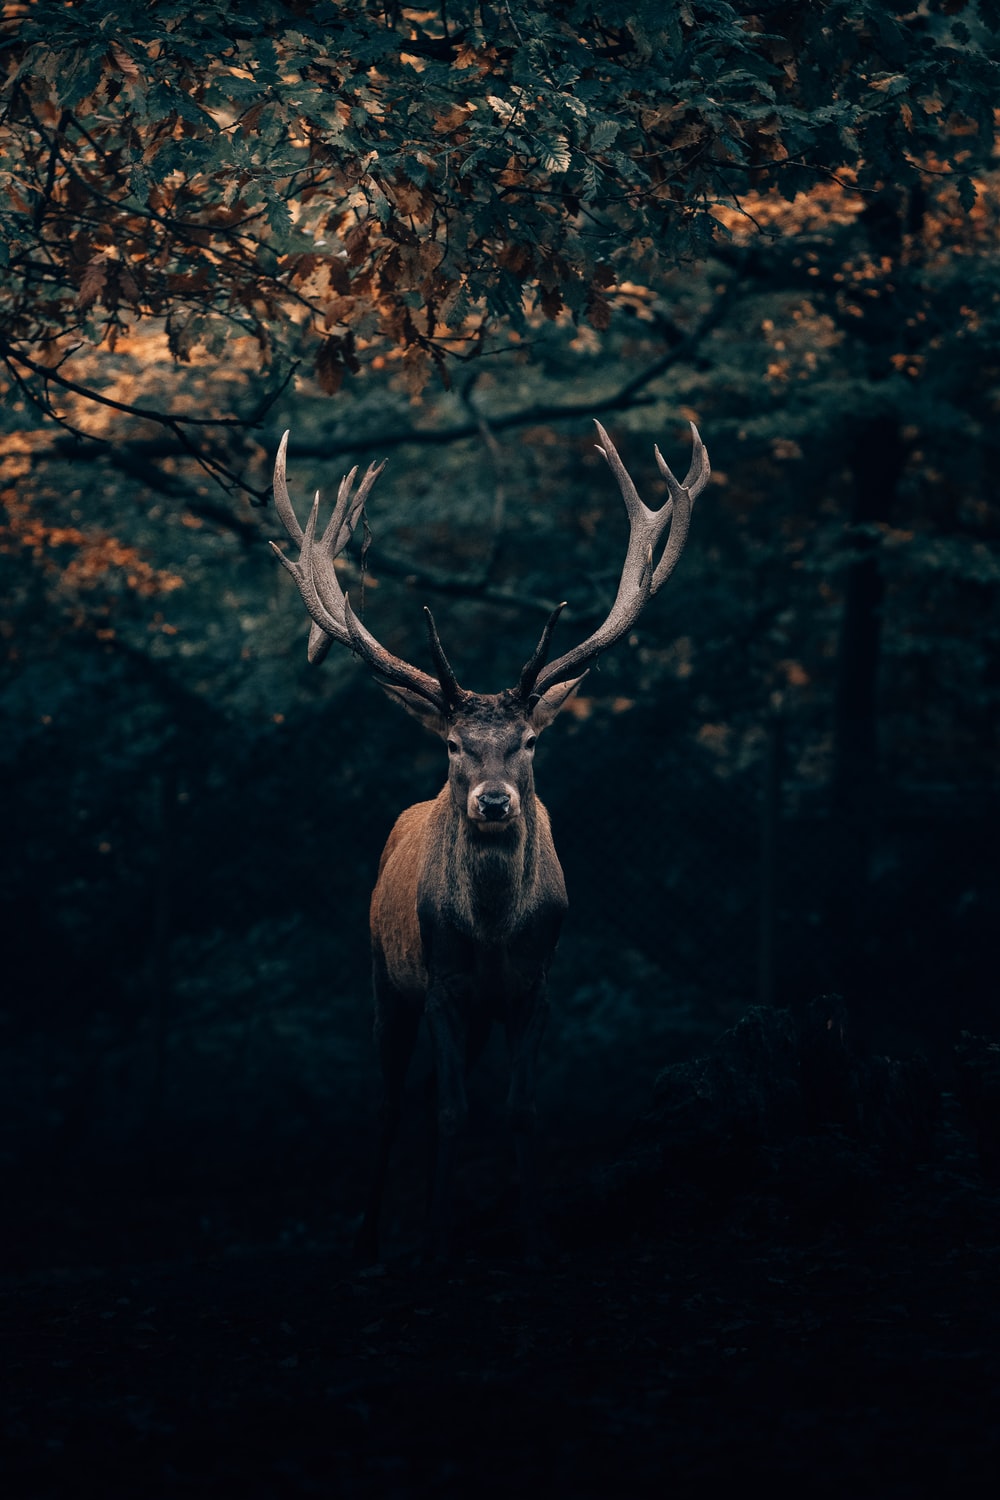 Deer Head Picture. Download Free Image